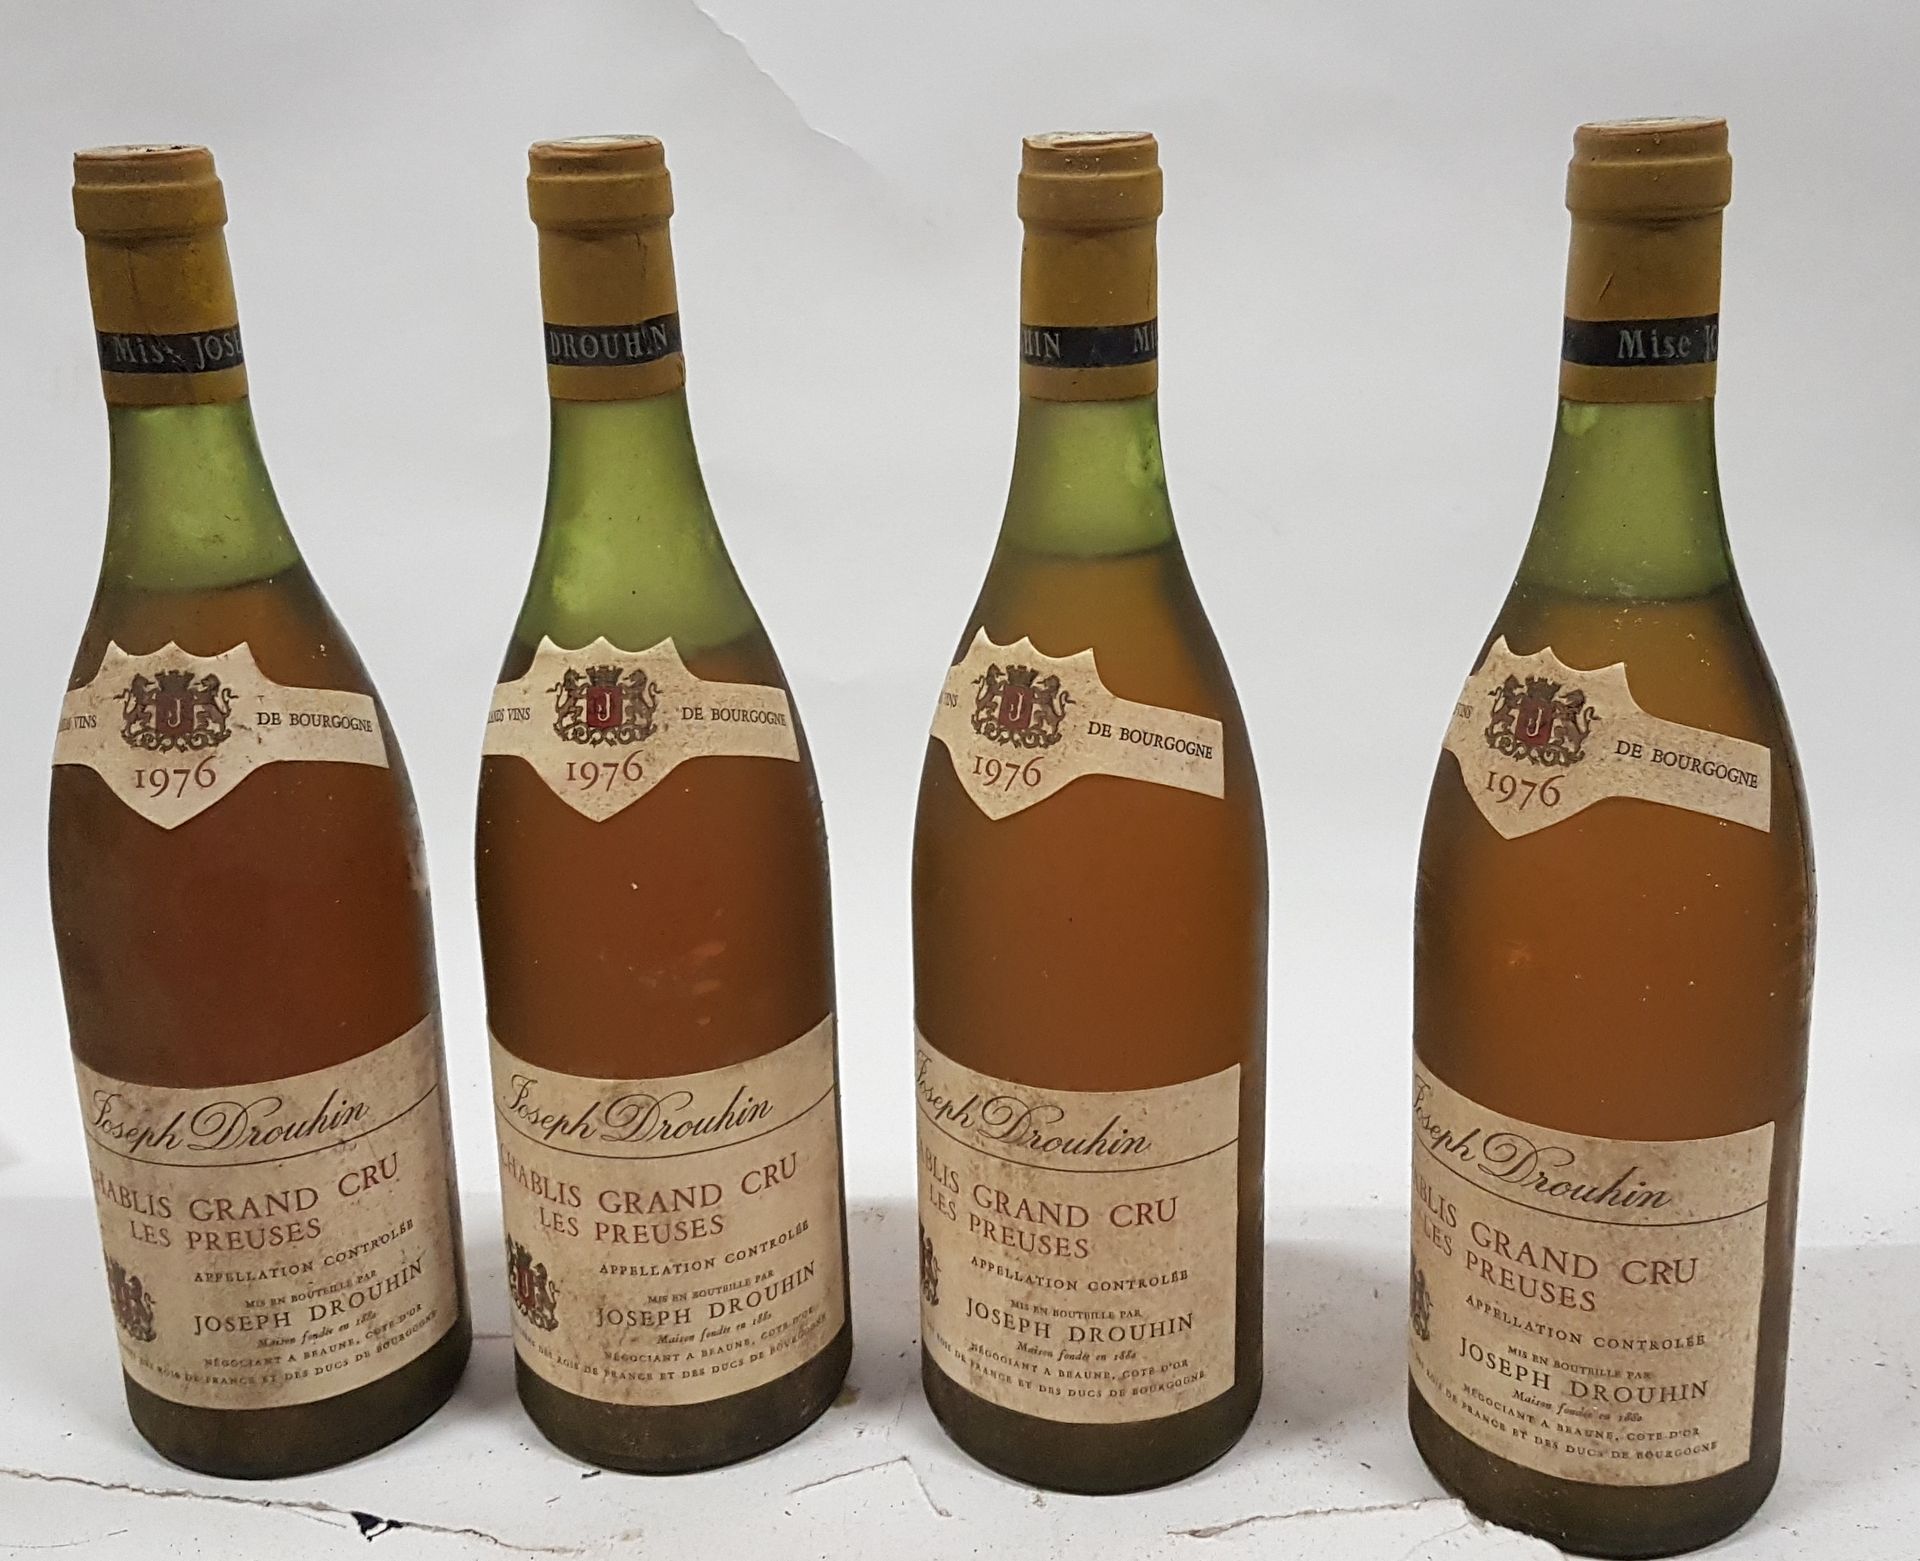 Null ○ CHABLIS GC | Les Preuses, Joseph Drouhin, 1976

4 bouteilles (MB, V LB, B&hellip;